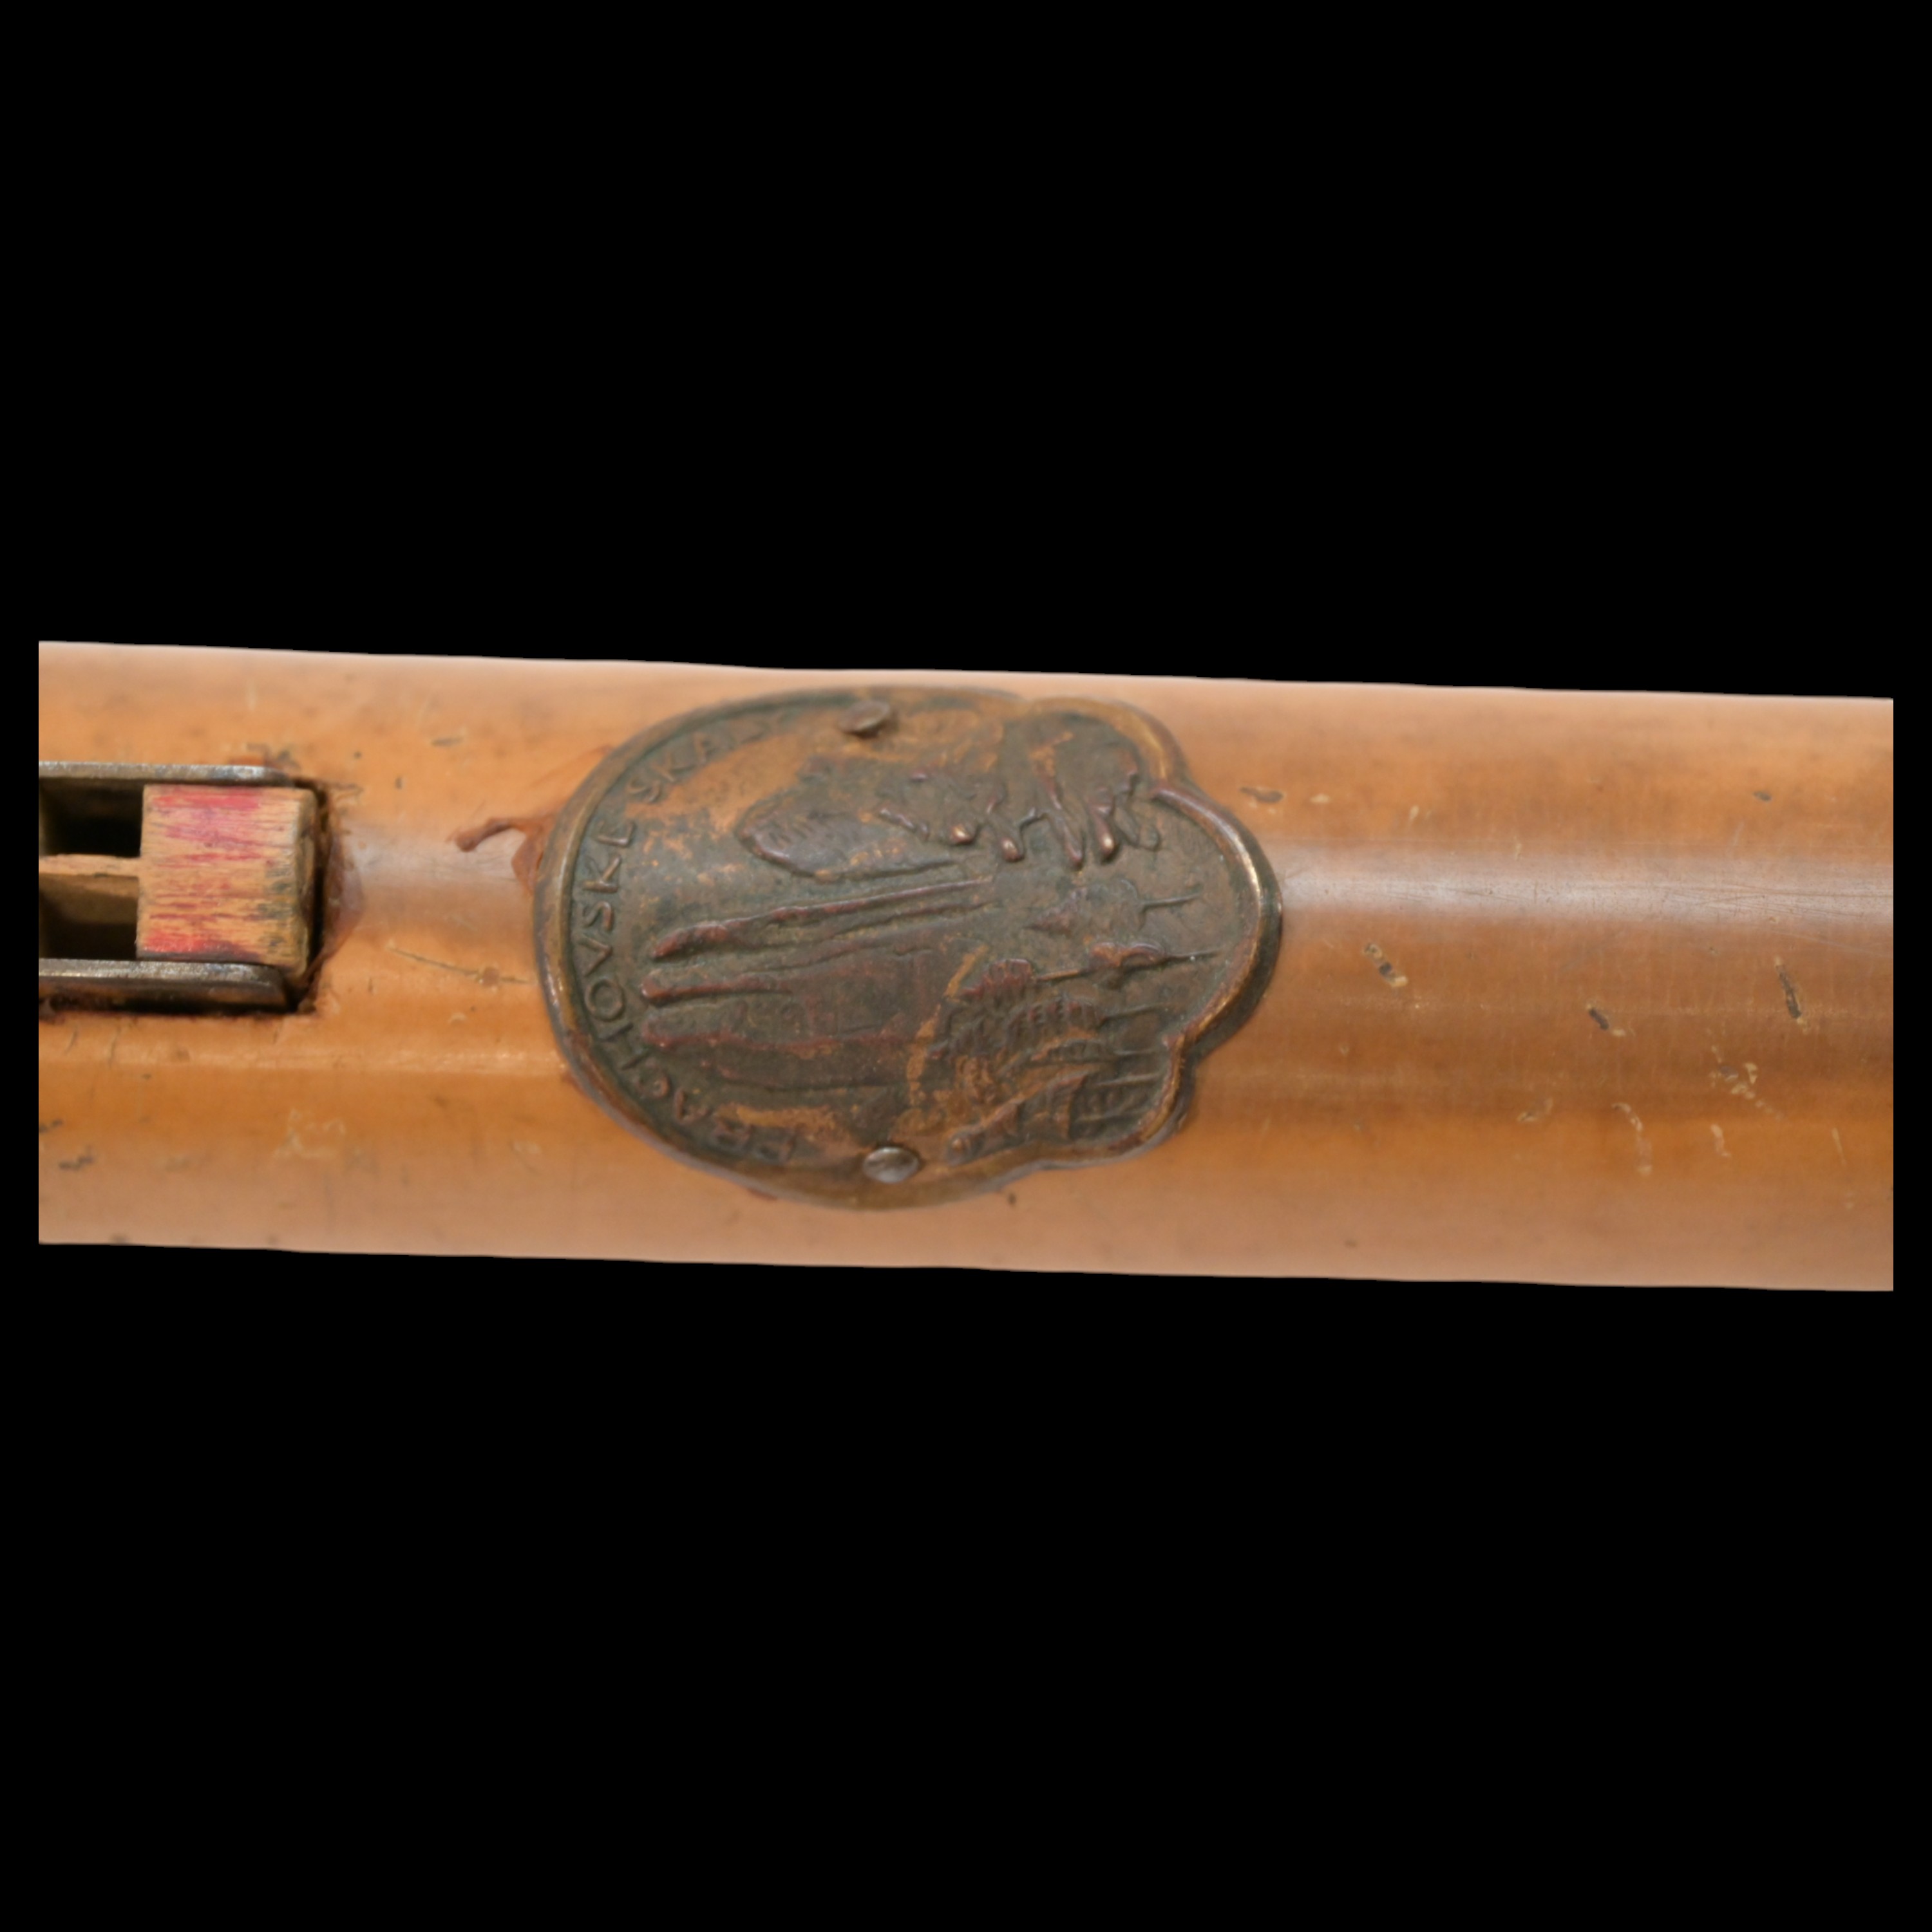 A rare Walking Stick Cane, Harmonica, Czech Republic, early 20th century. - Image 4 of 6